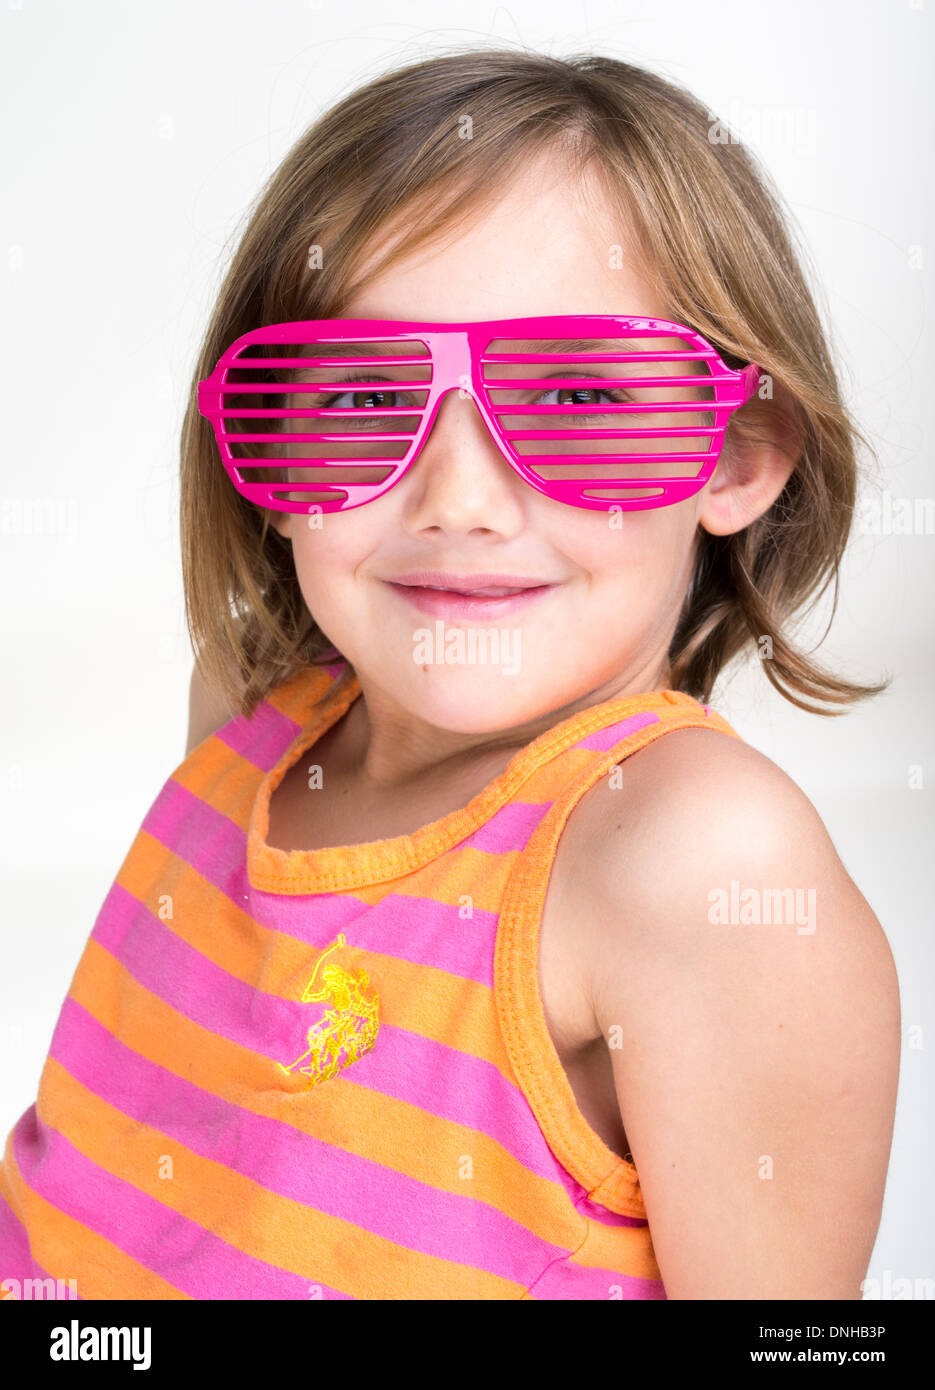 Young girl wearing pink shutter sunglasses Stock Photo